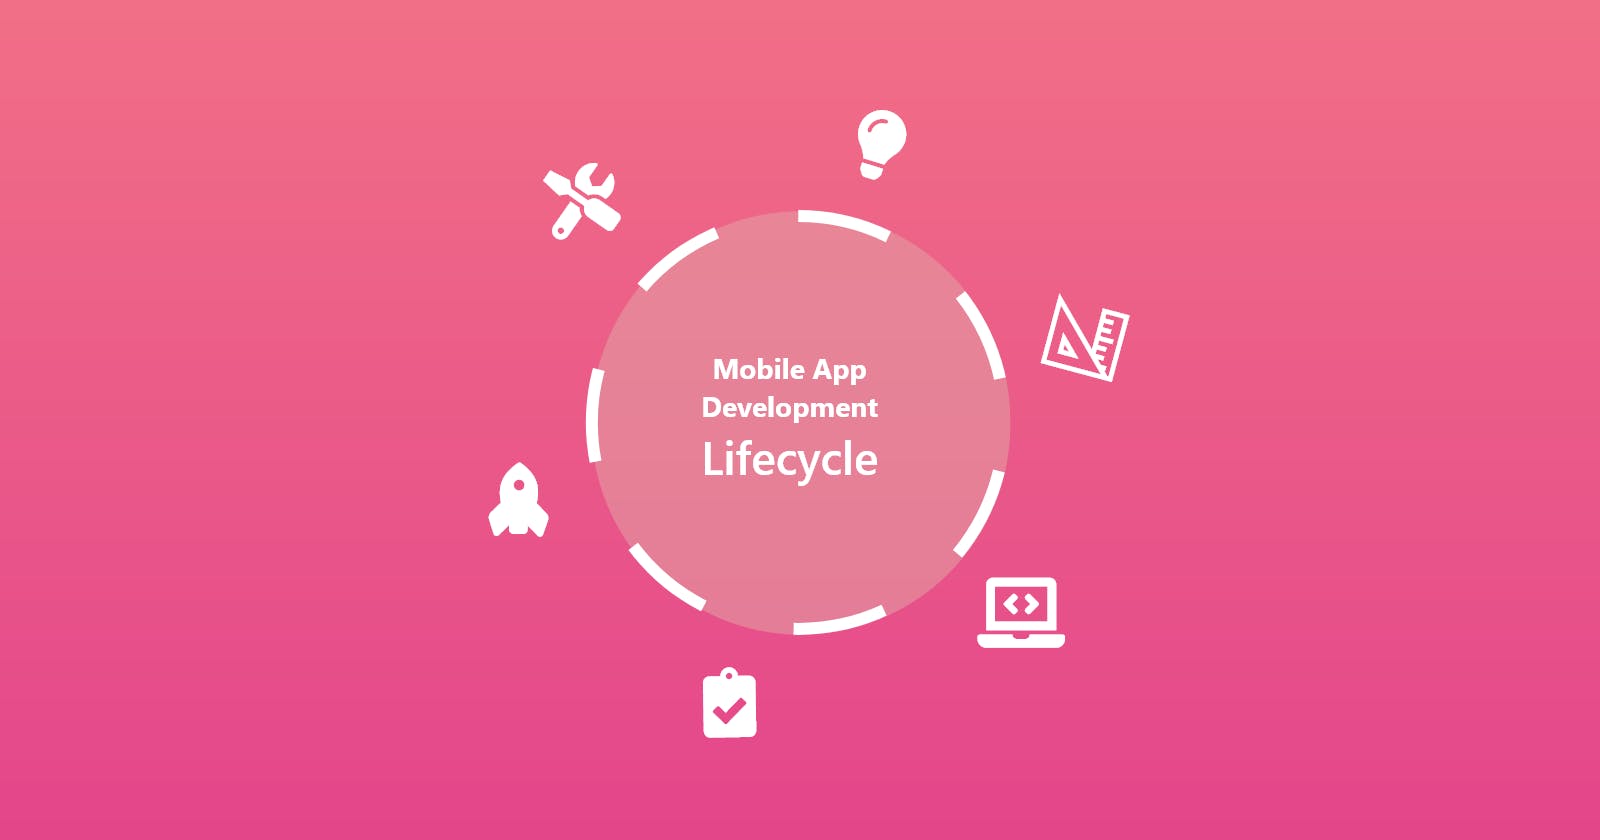 Intro to Mobile App Development Lifecycle